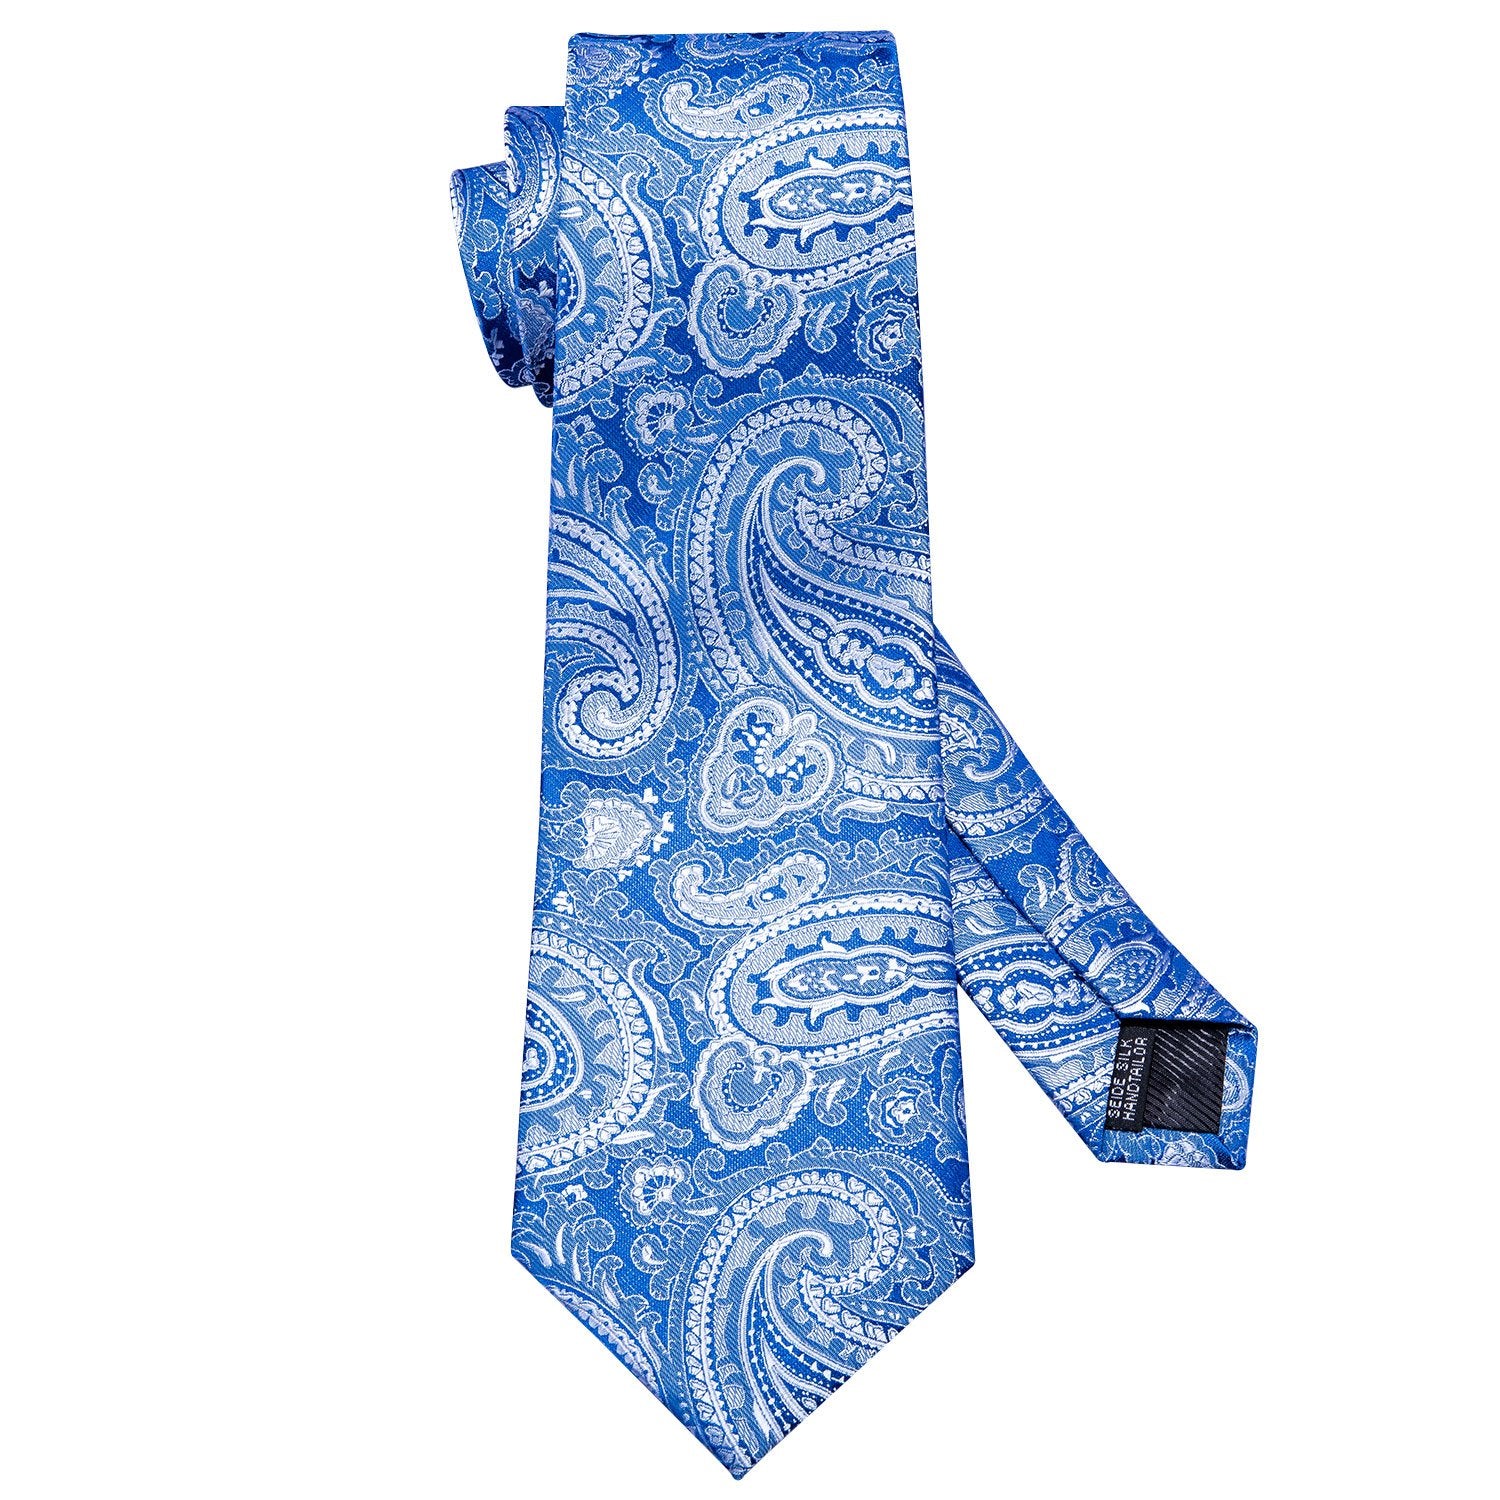 Silver Blue Paisley Necktie Pocket Square Cufflinks Set - barry-wang